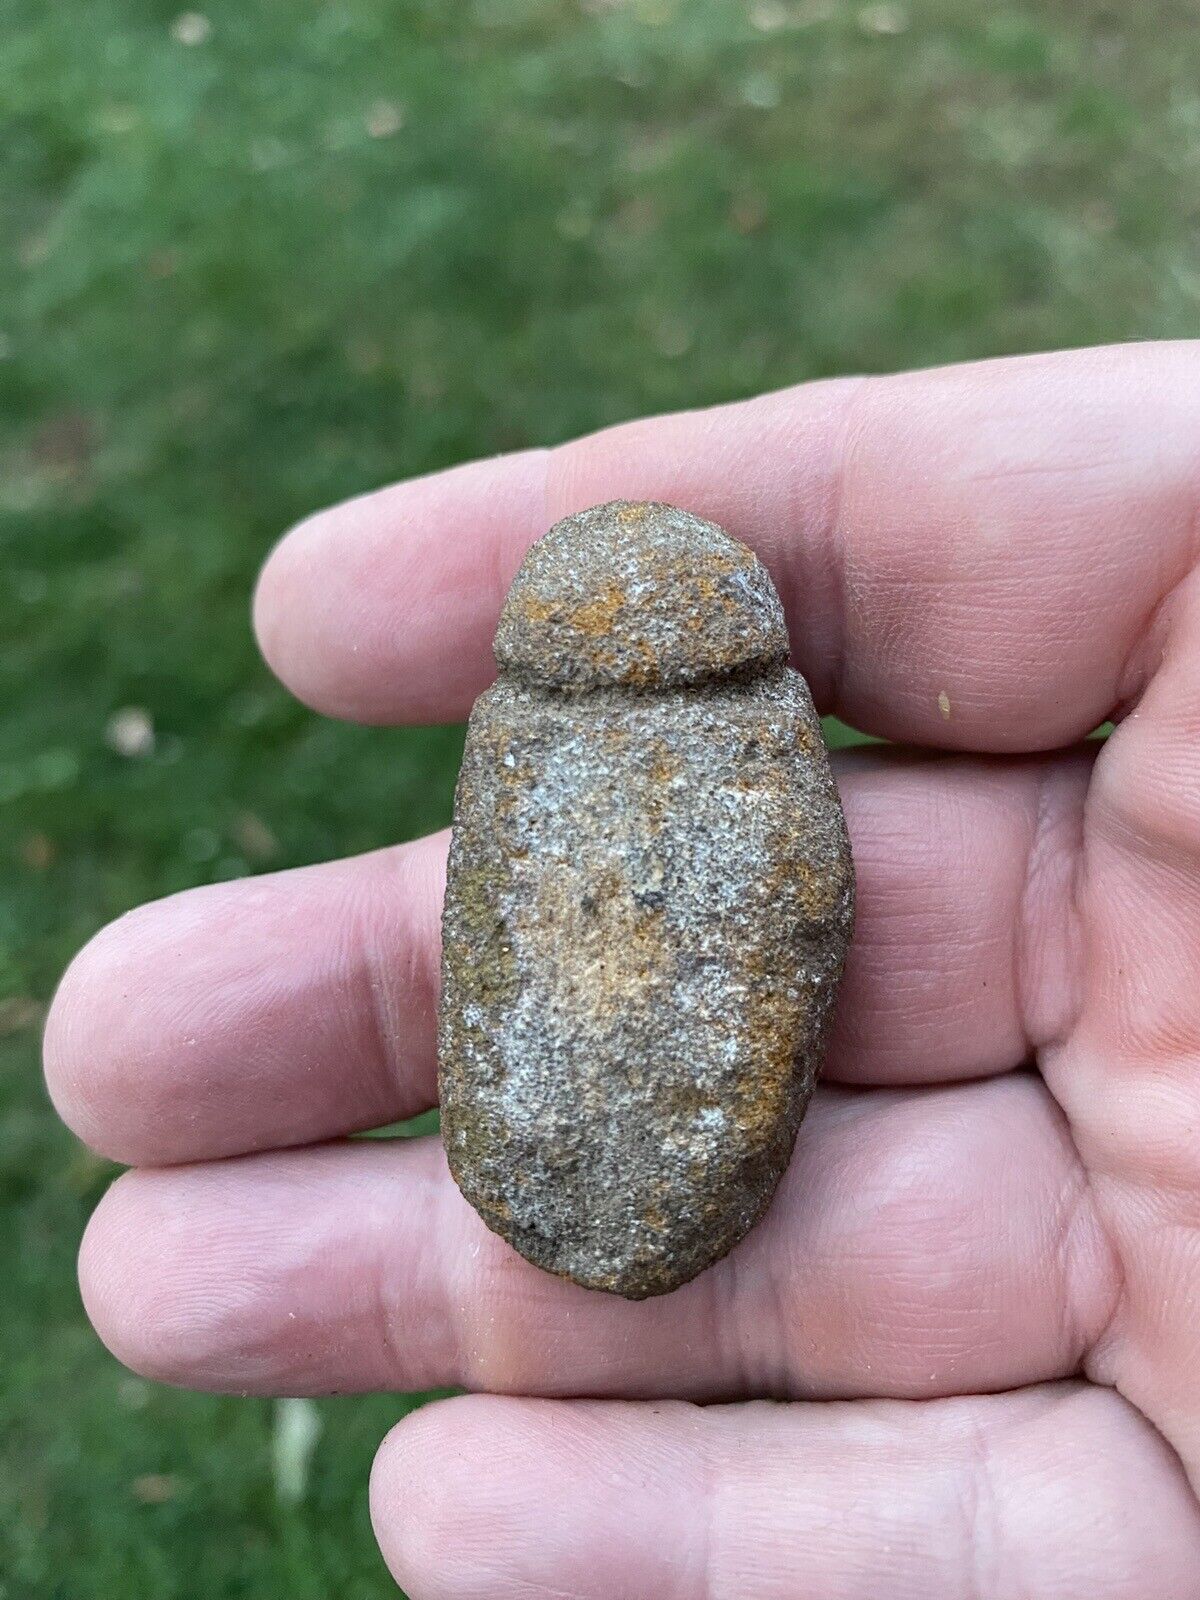 Cool Georgia Pendant or Plummet arrowheads Indian artifacts